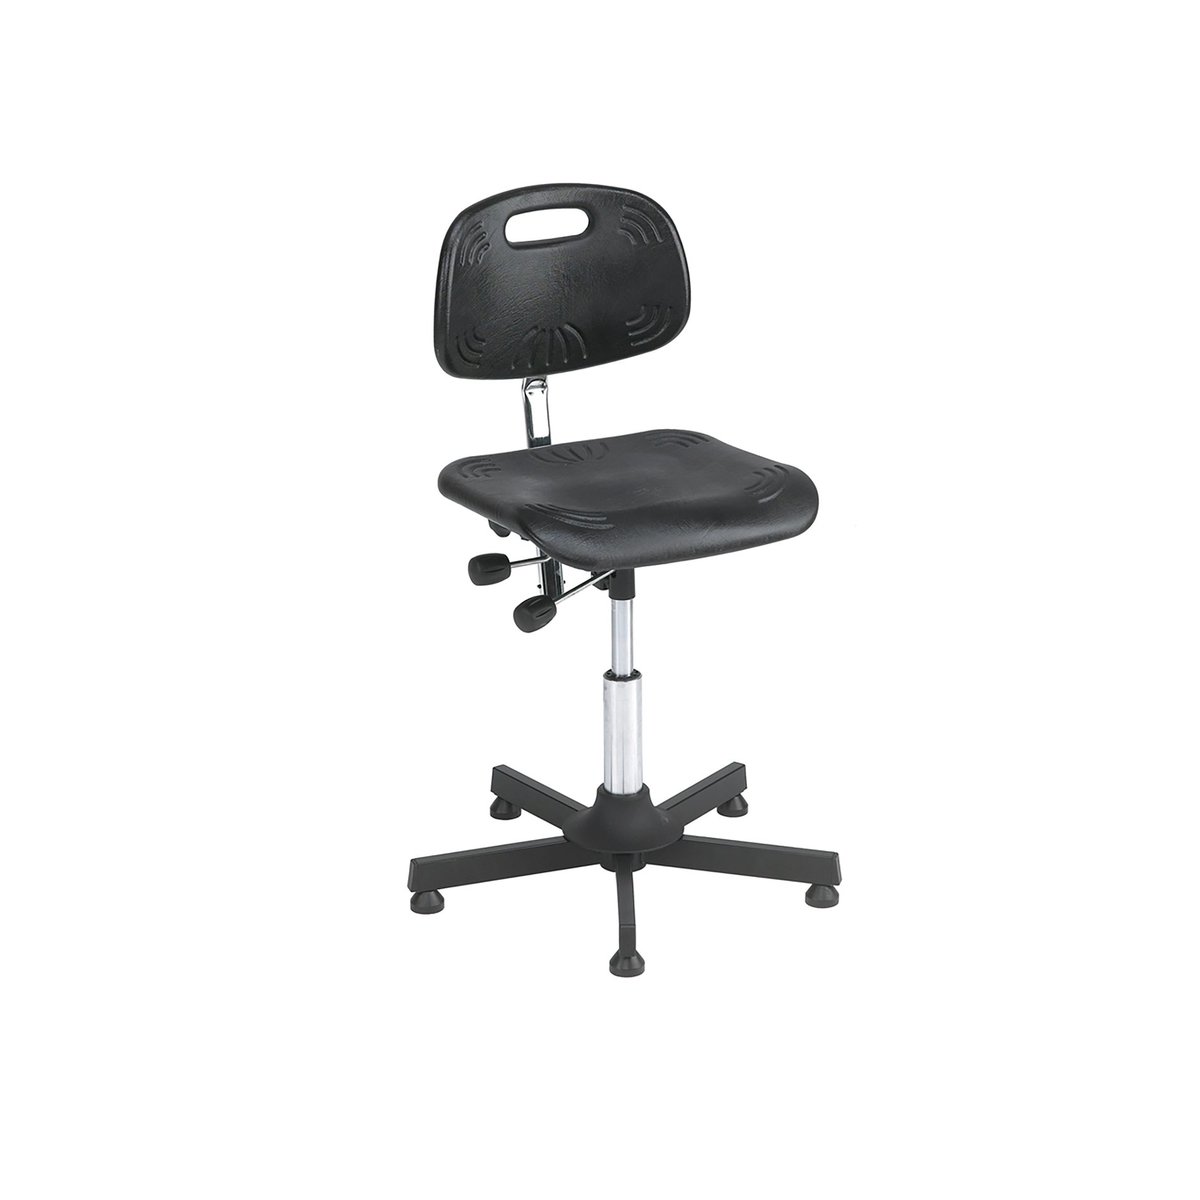 88601008 - Industrial chair